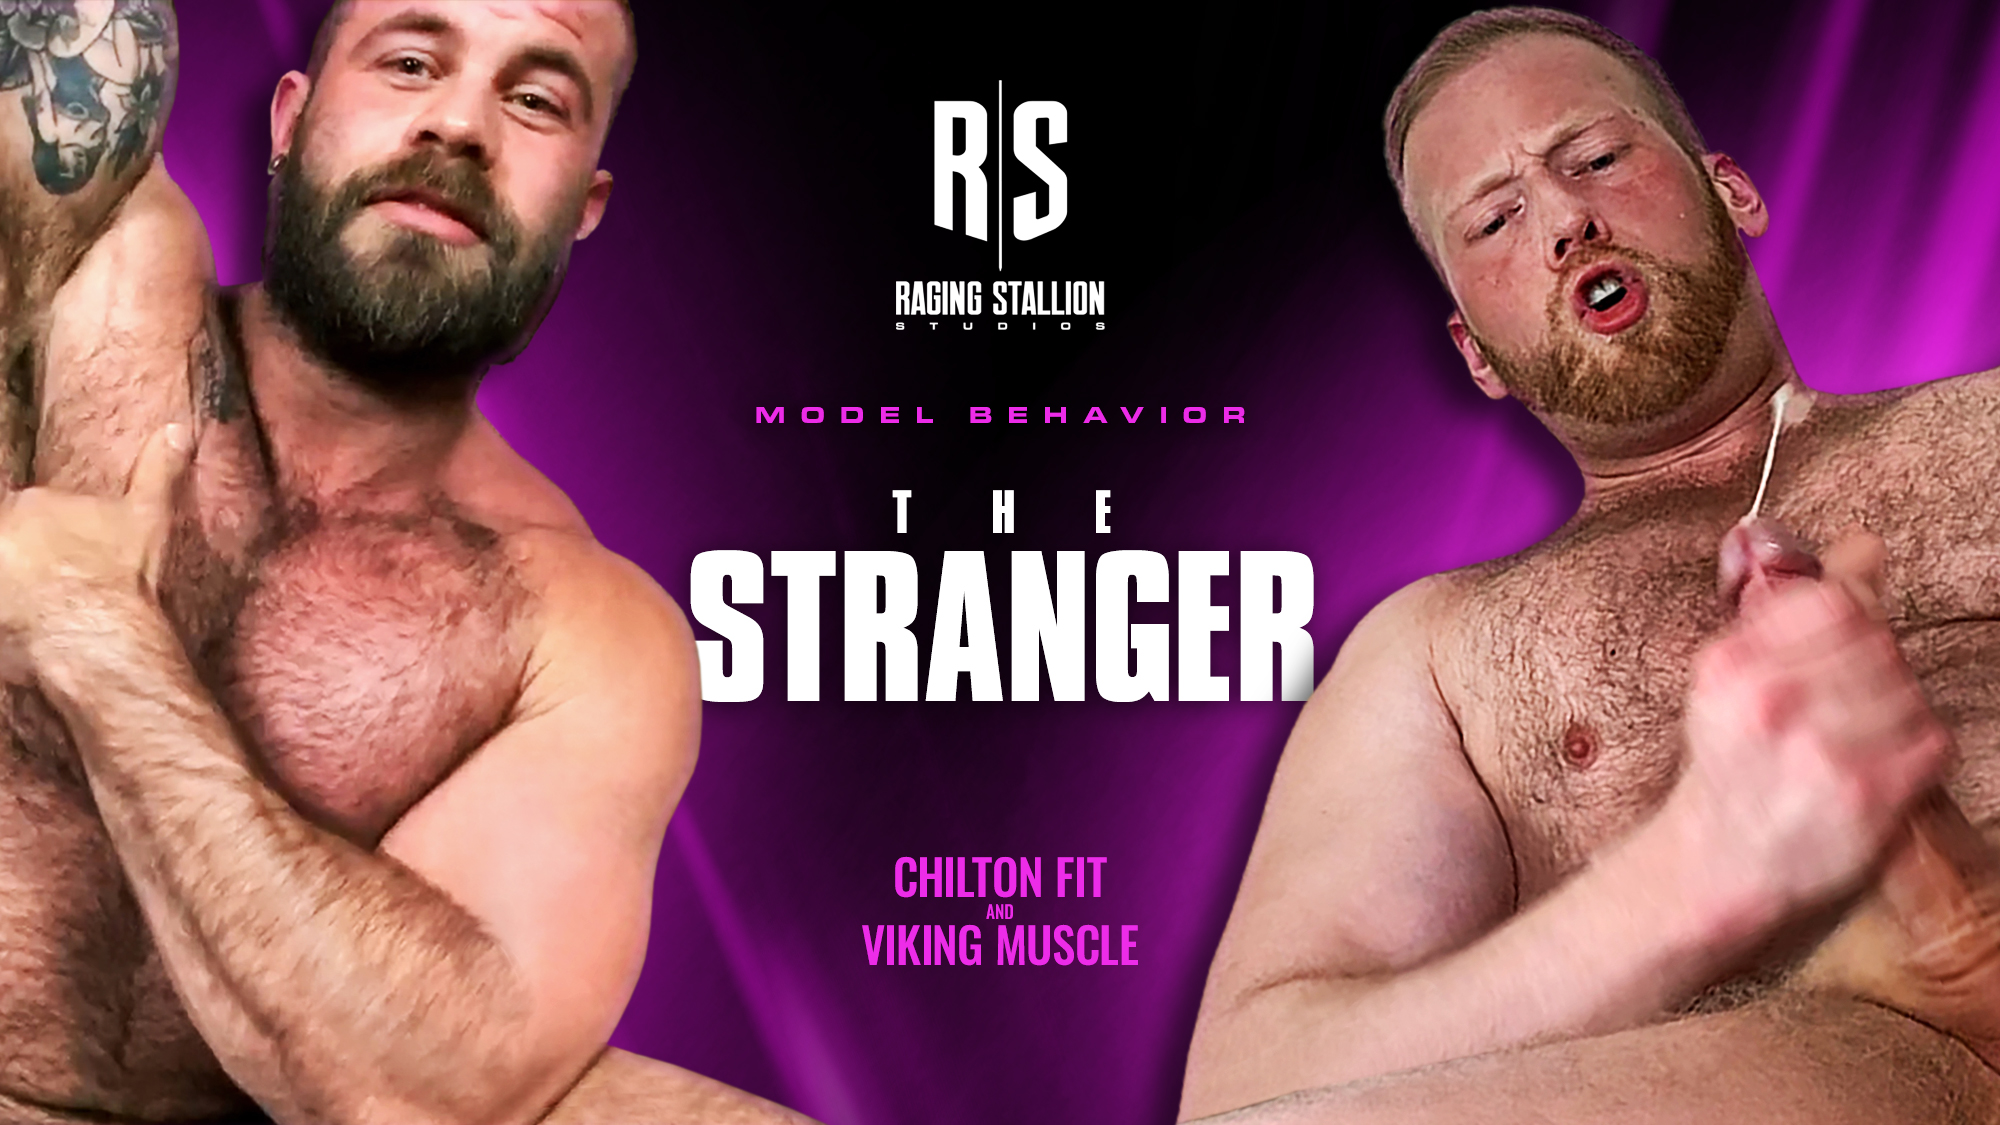 Gay Viking Porn - Chilton Fit & Viking Muscle - Gay - MODEL BEHAVIOR: THE STRANGER